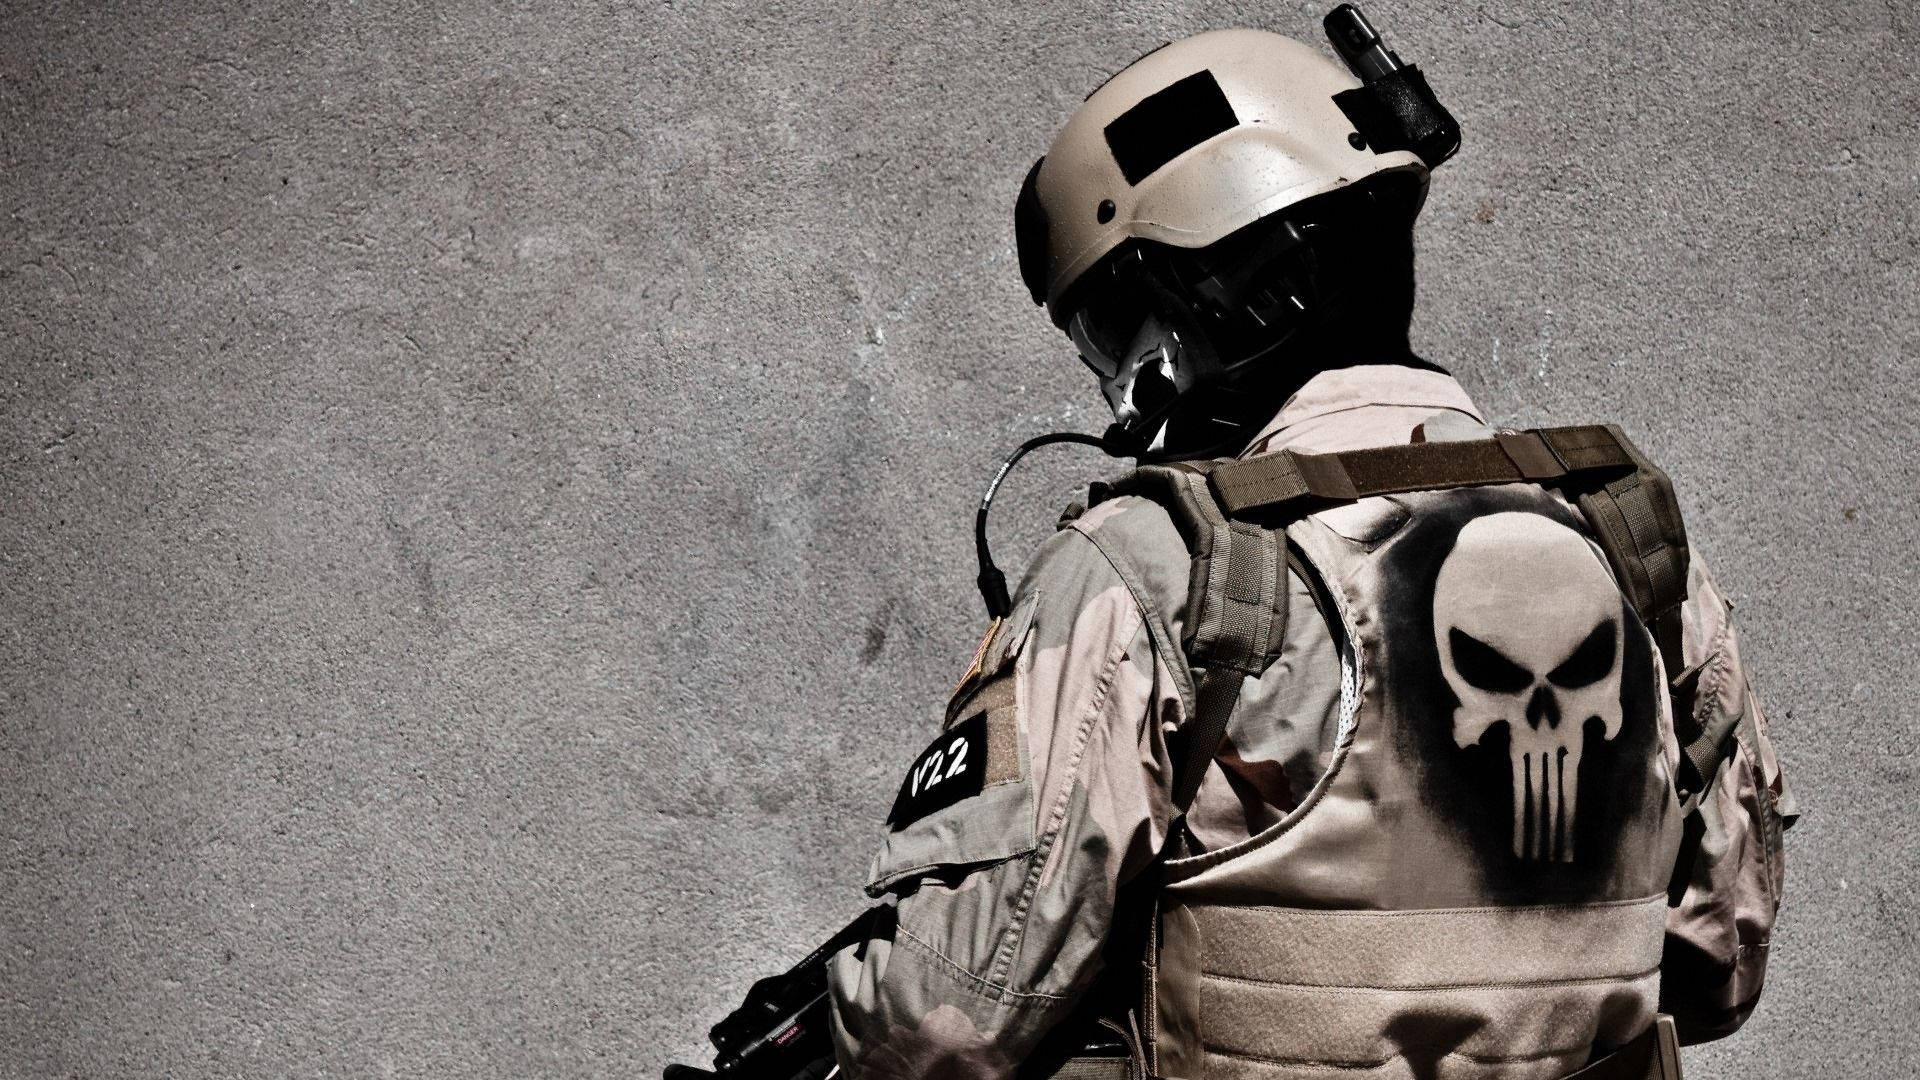 Download Army Skull Uniform Wallpaper